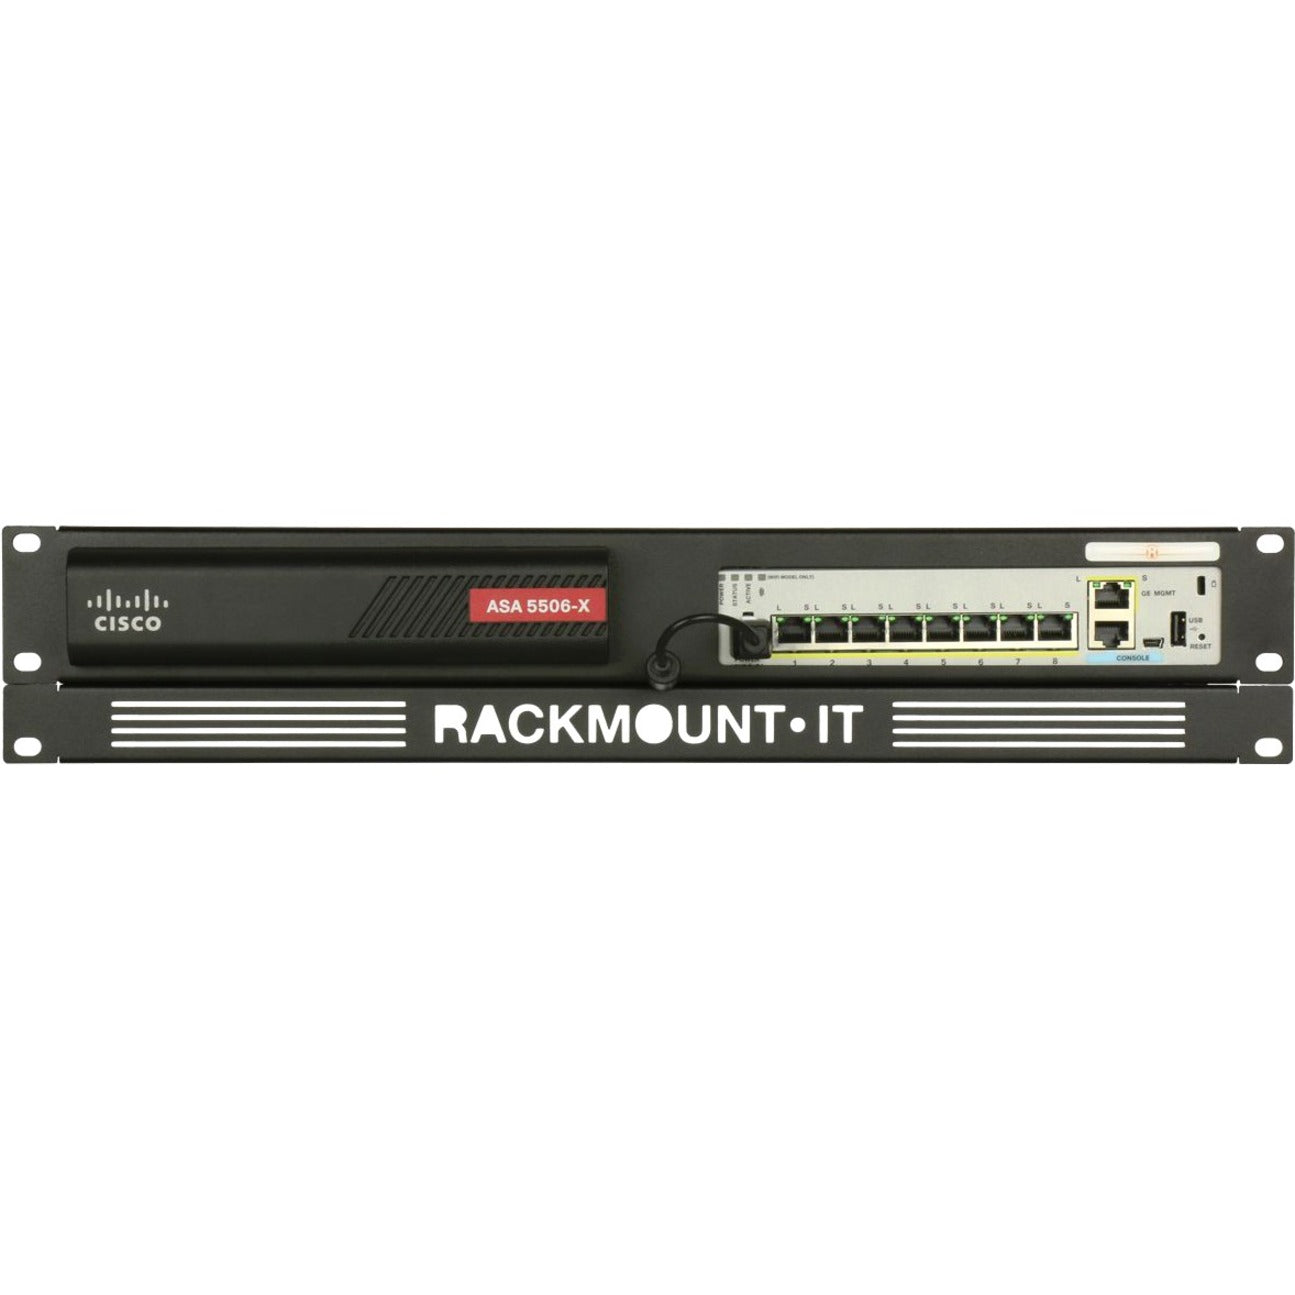 RACKMOUNT.IT RM-CI-T8 Cisrack Rack Mount, Compatible with Cisco ASA 5506-X and Firepower 1010